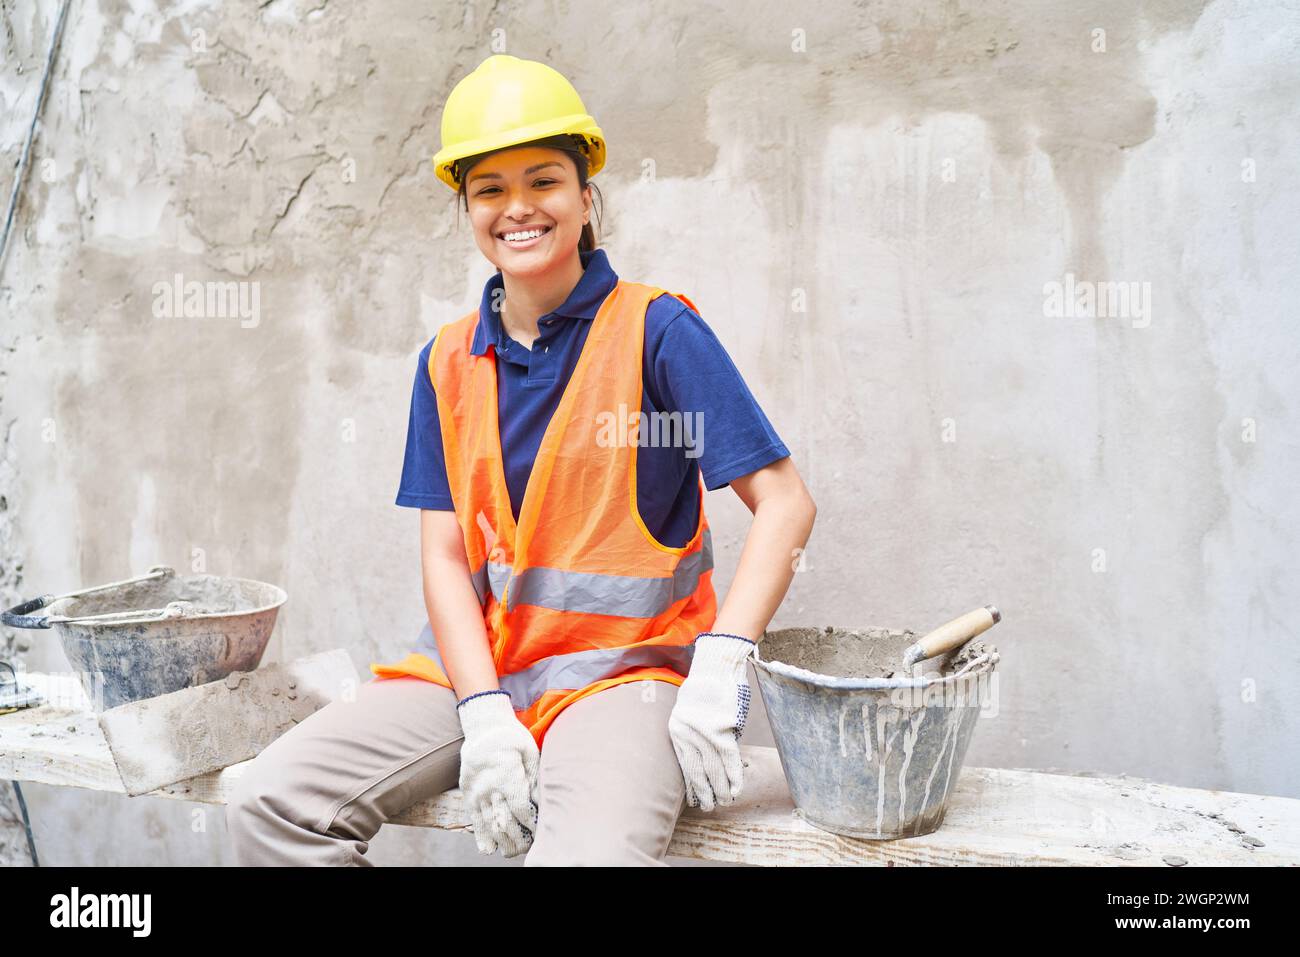 Happy female bricklayer amidst buckets Stock Photo